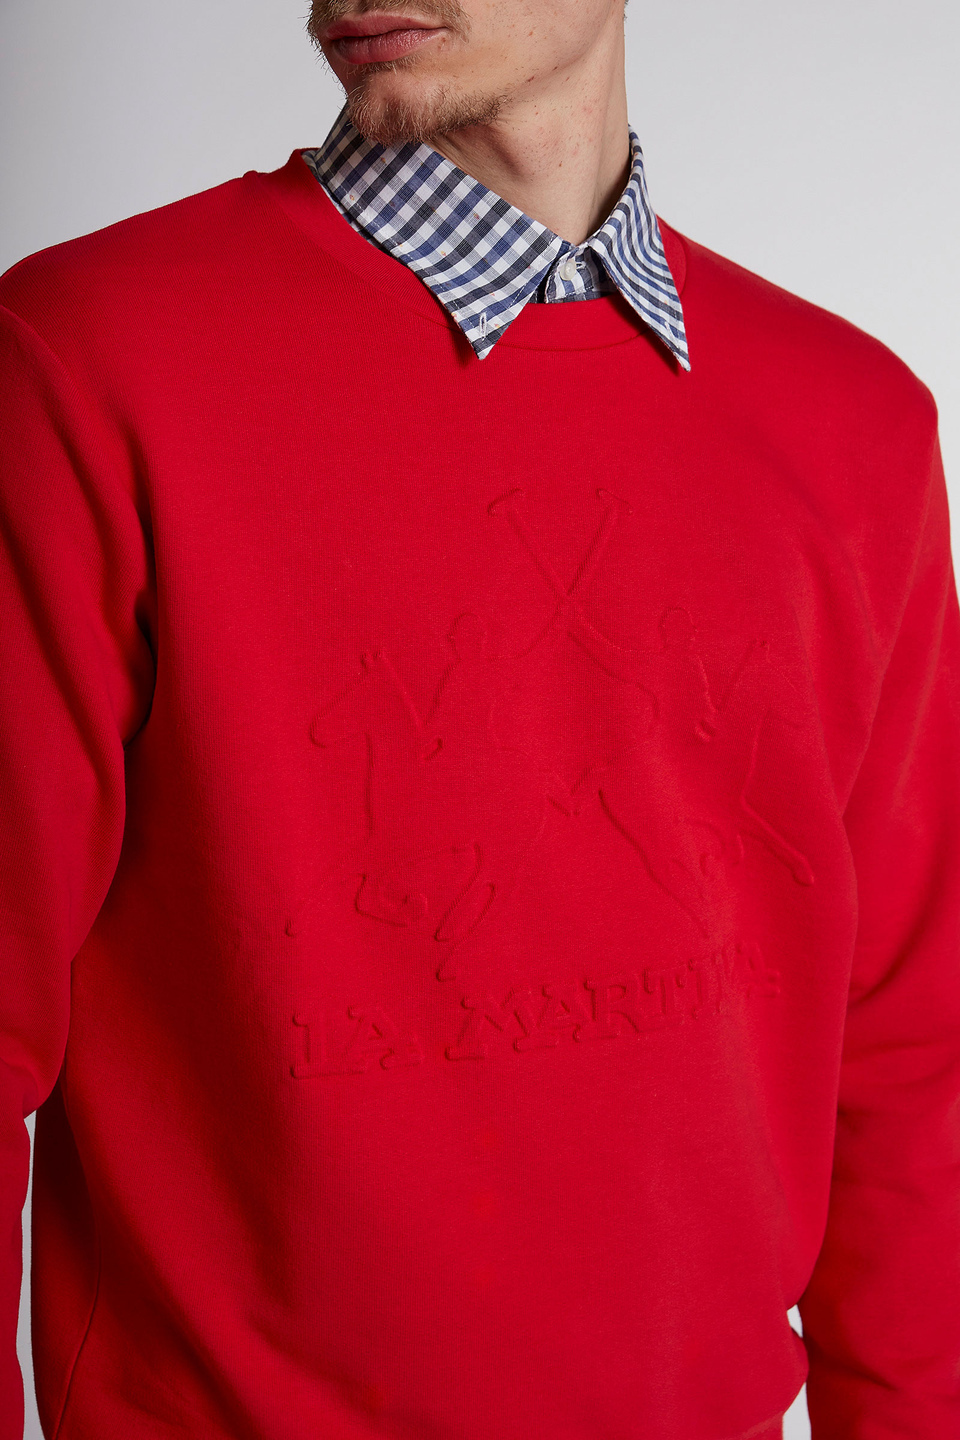 Men's regular-fit crew-neck cotton sweatshirt | La Martina - Official Online Shop